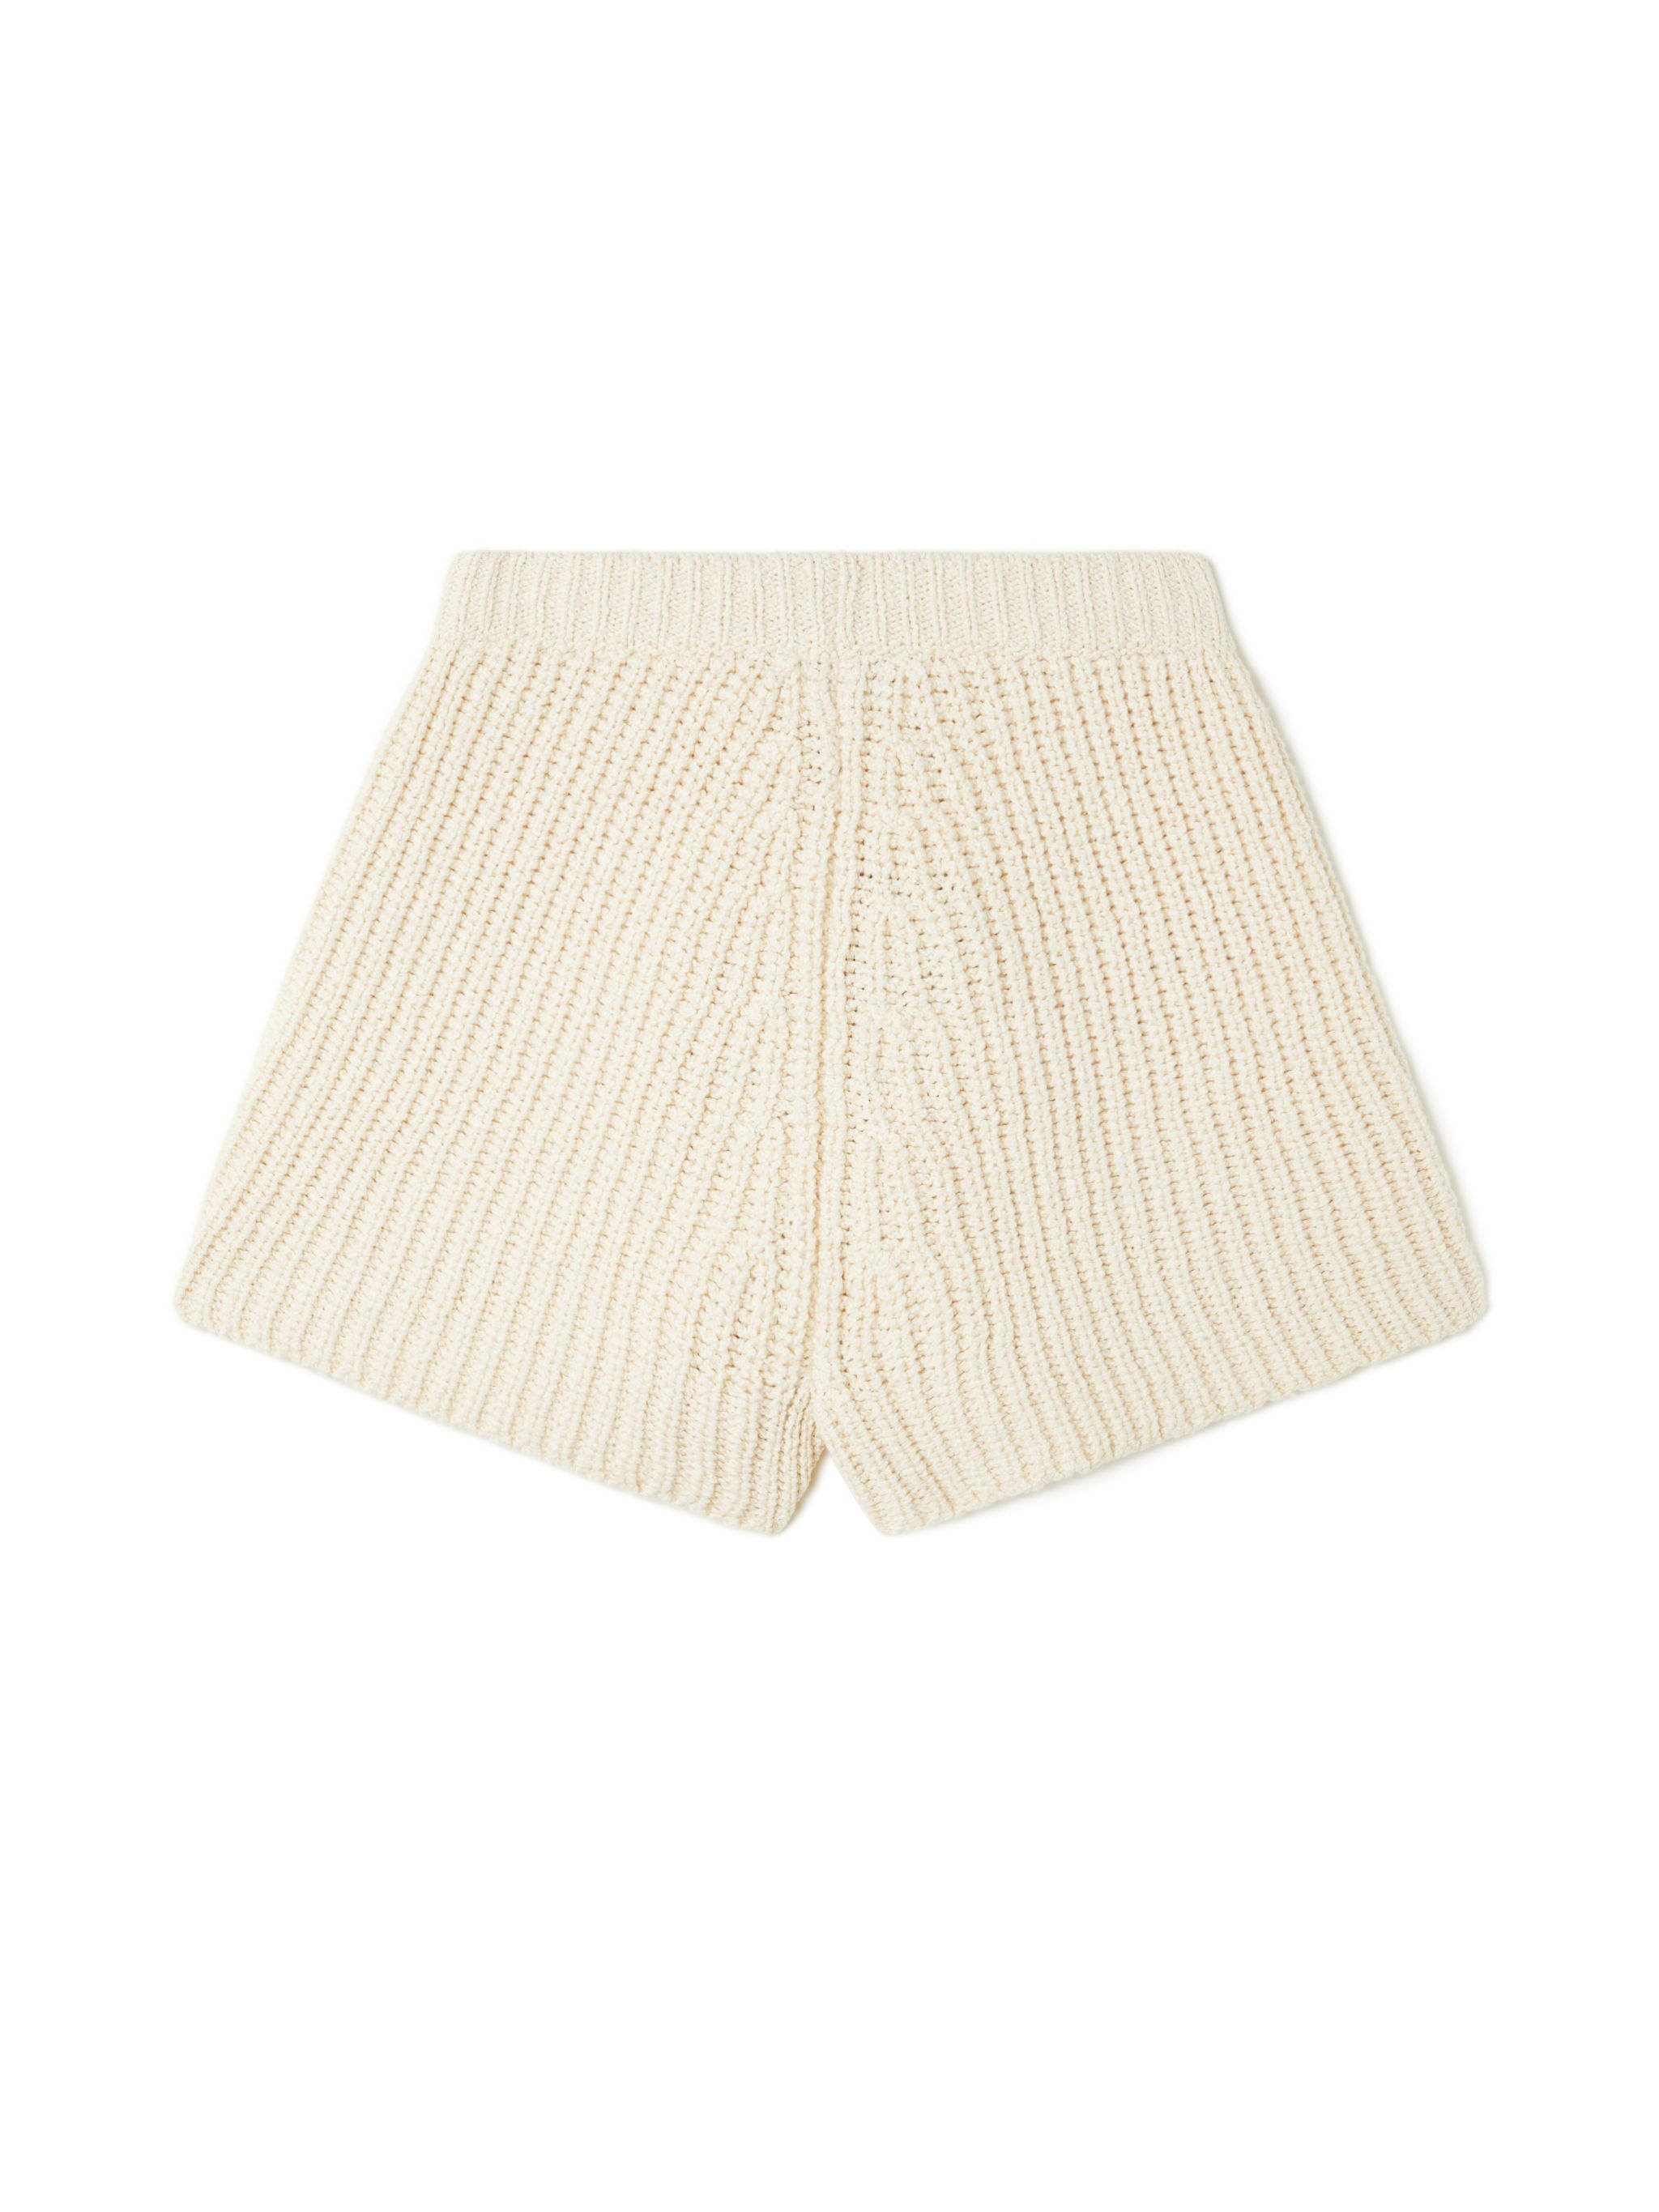 Lush Nature Knit Shorts - 3